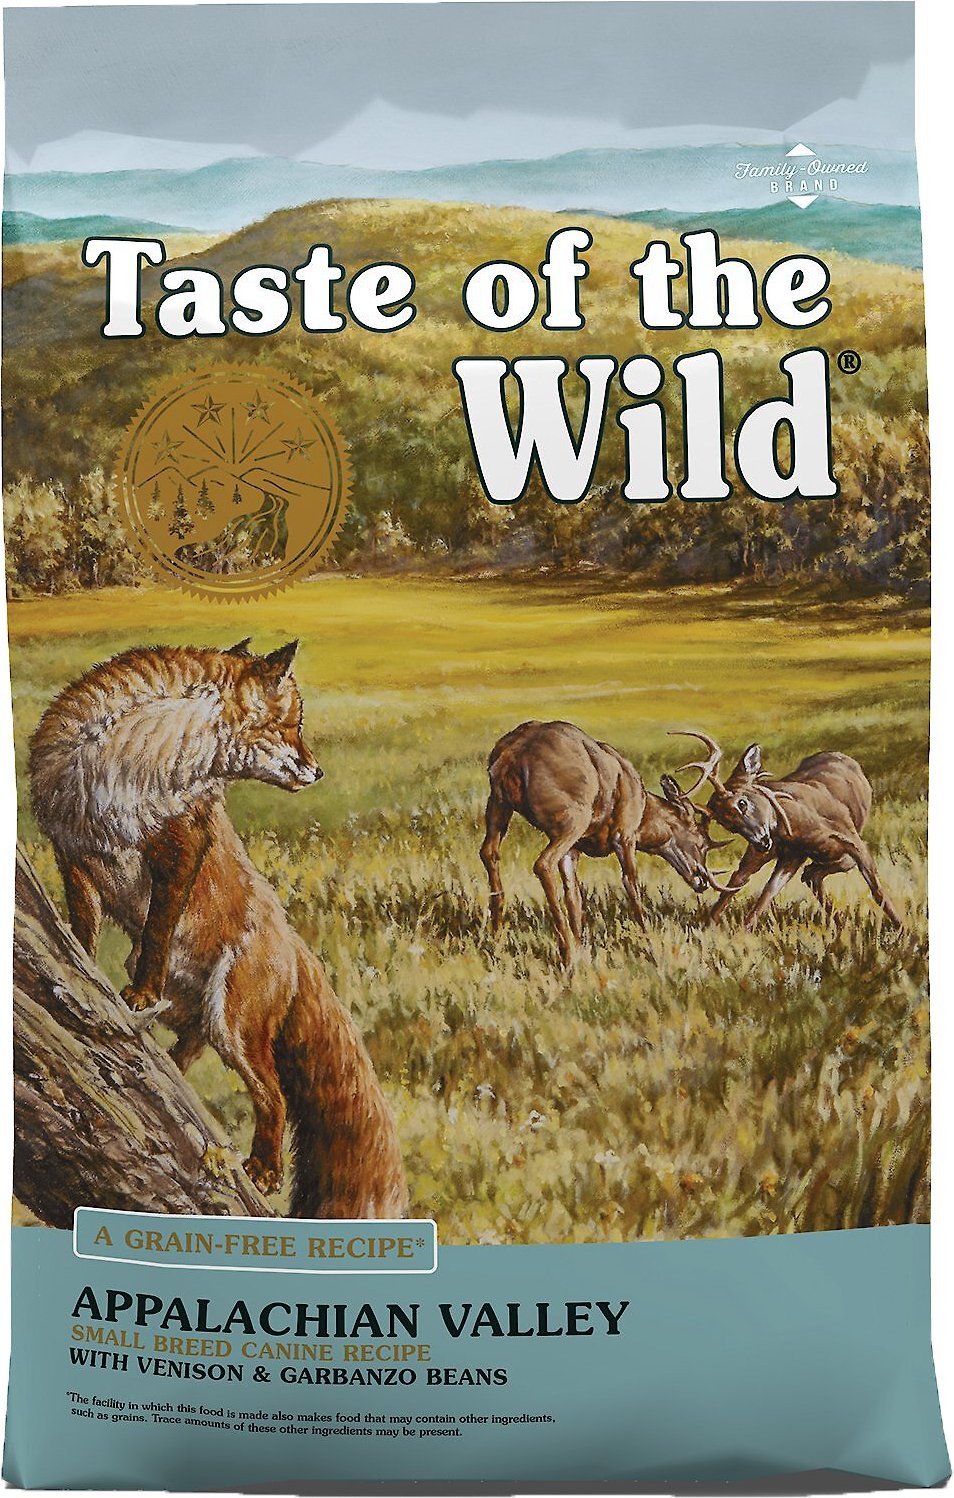 Taste of the Wild Appalachian Valley Small Pet Food